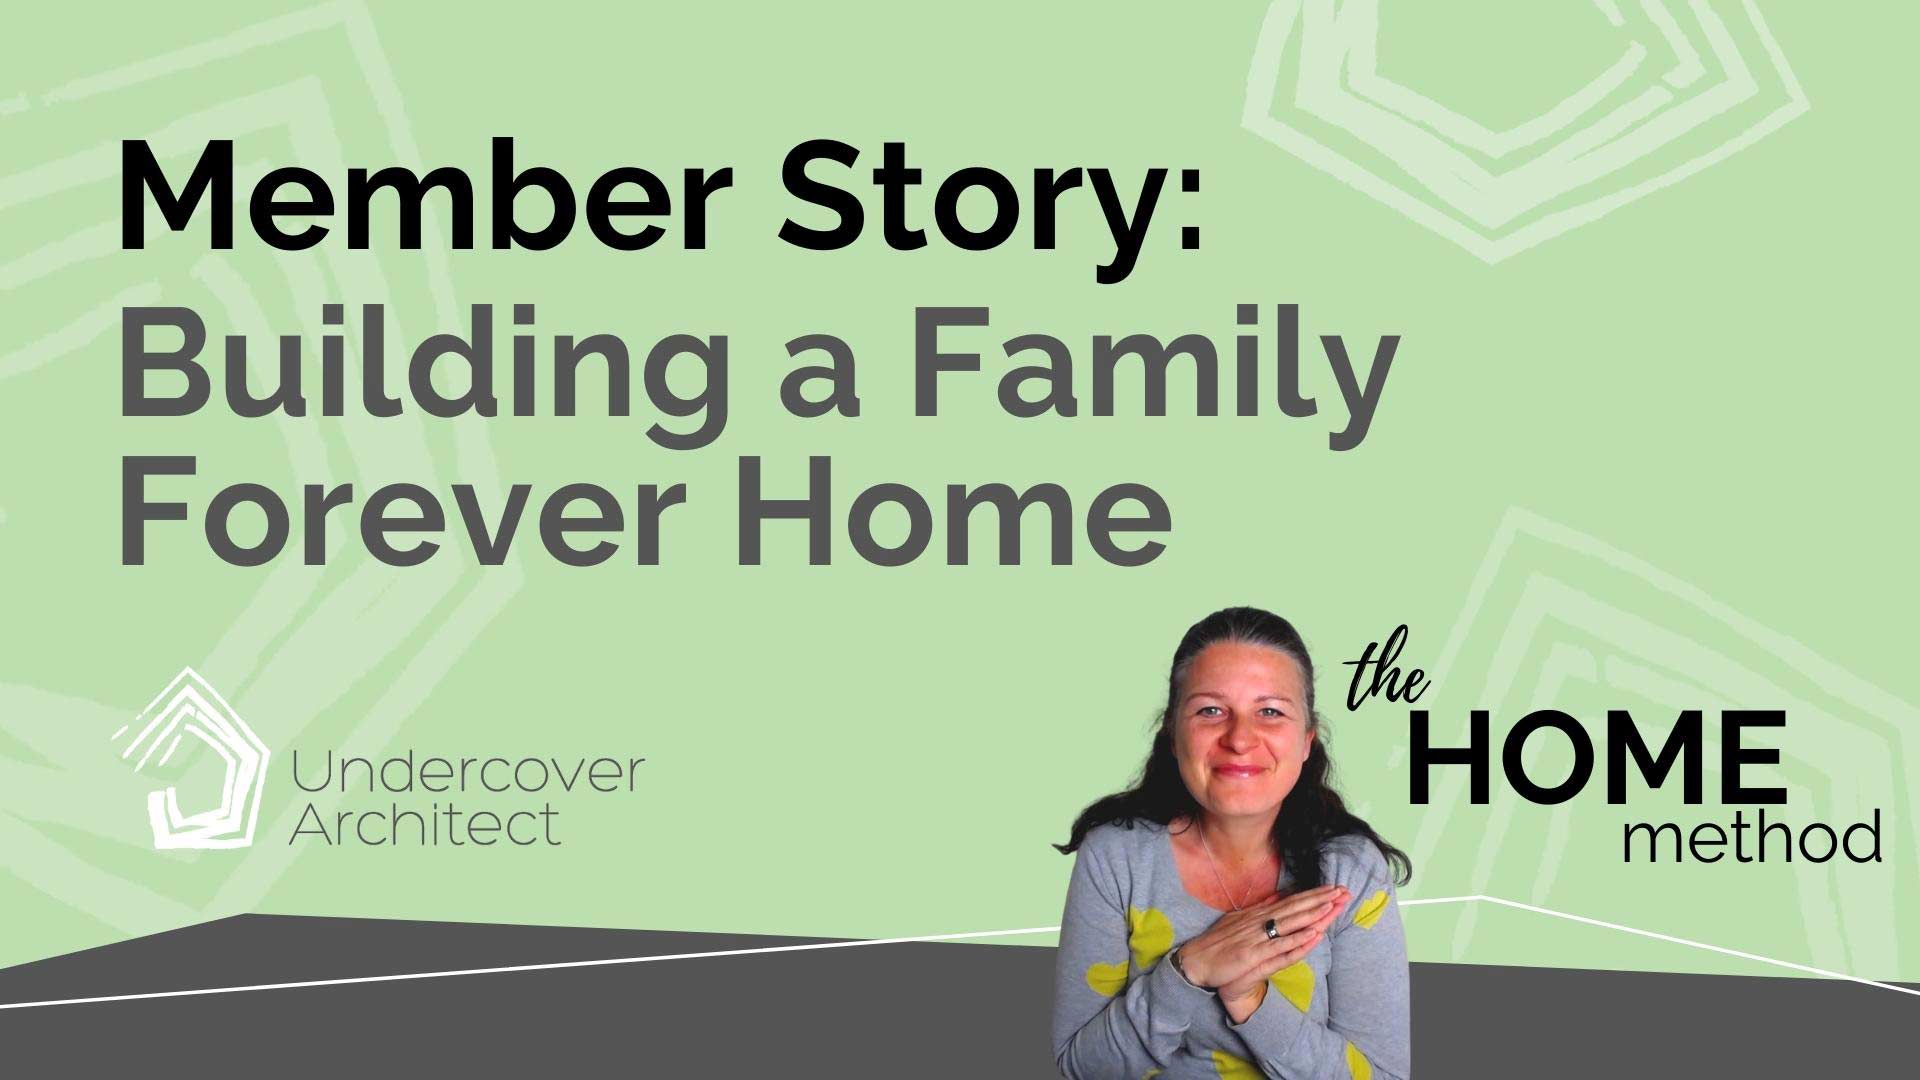 UndercoverArchitect-member-review-forever-family-home-belinda-costello